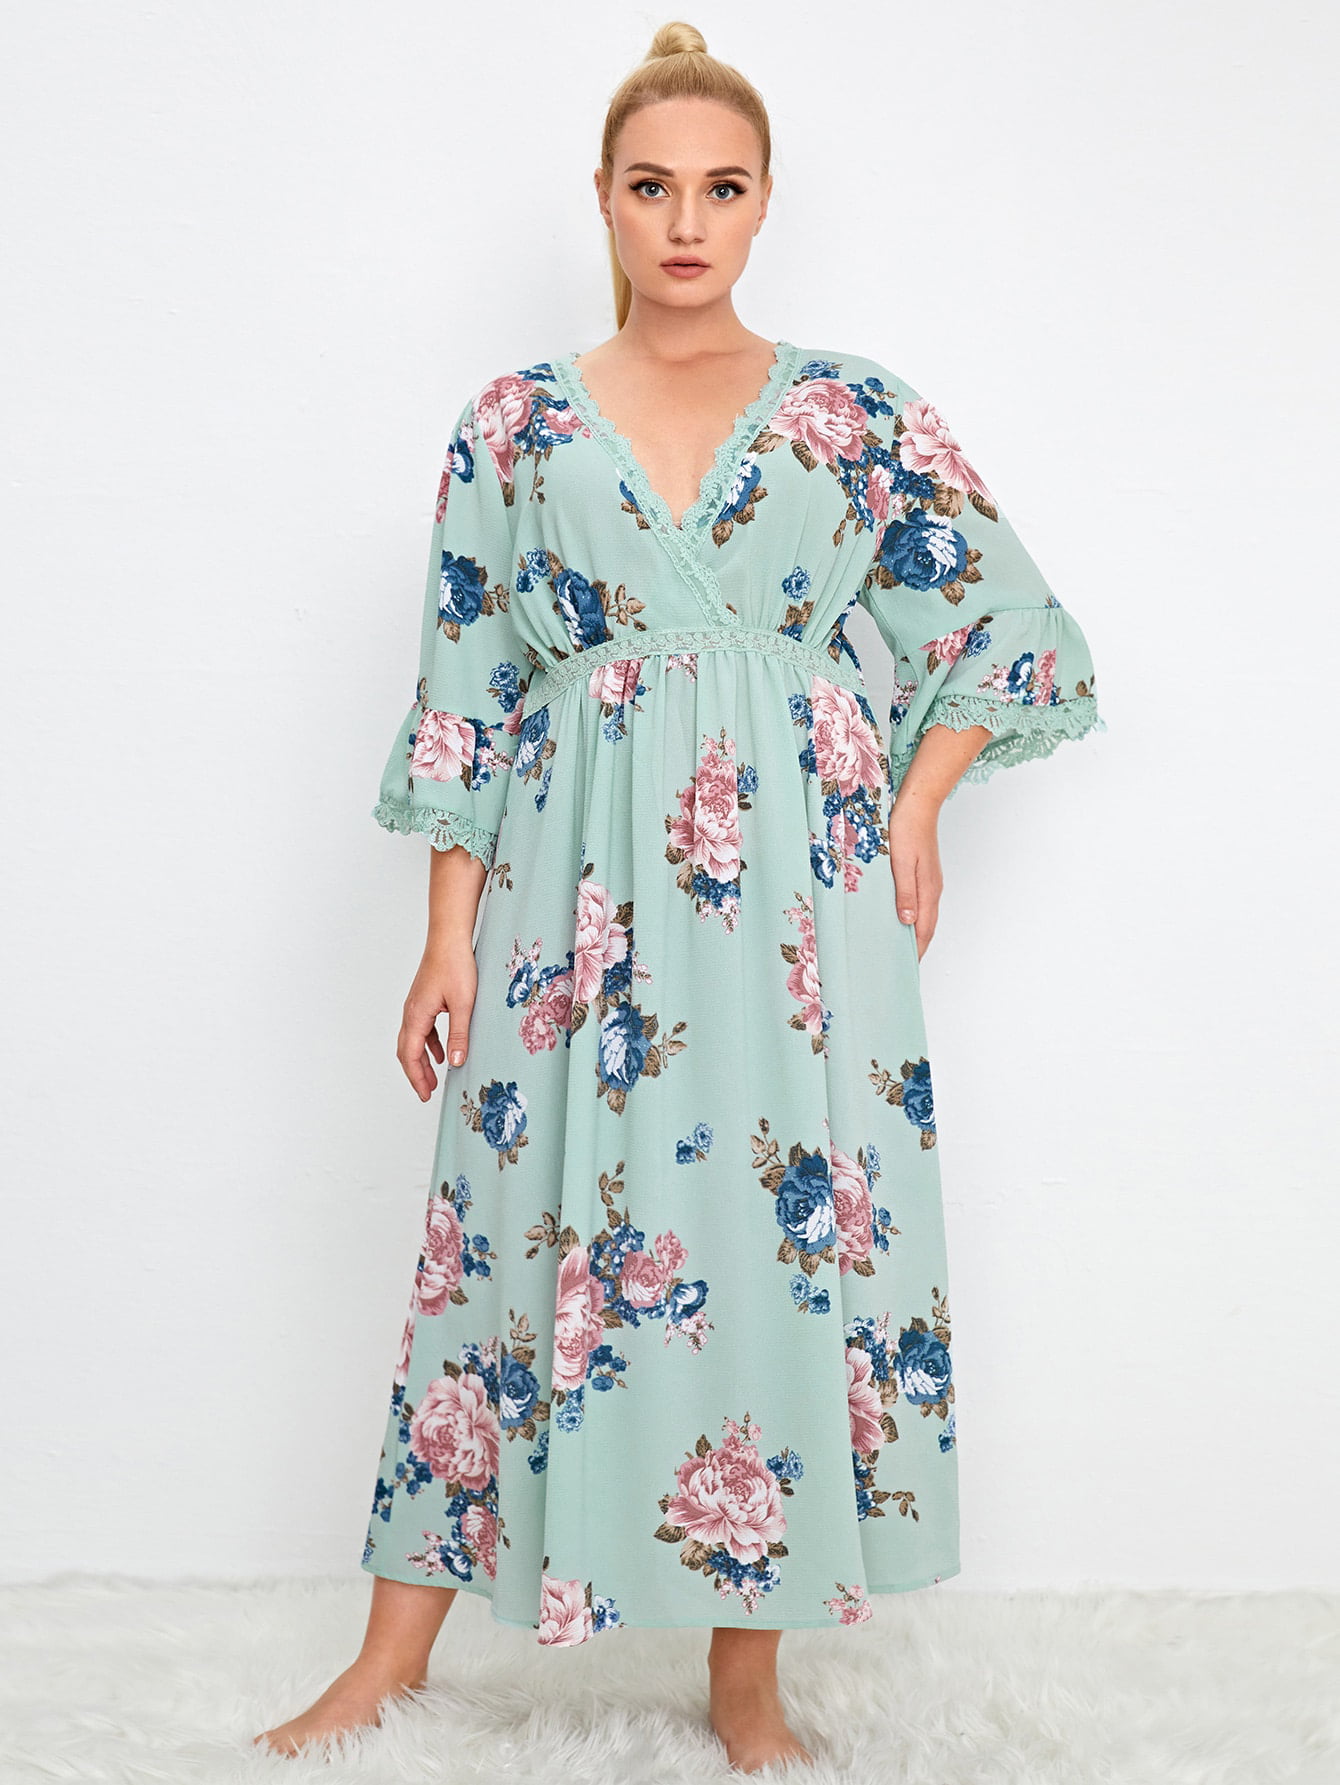 a.Jesdani Womens Plus Size Sleepwear Night Gown V neck Floral Lace Trim ...